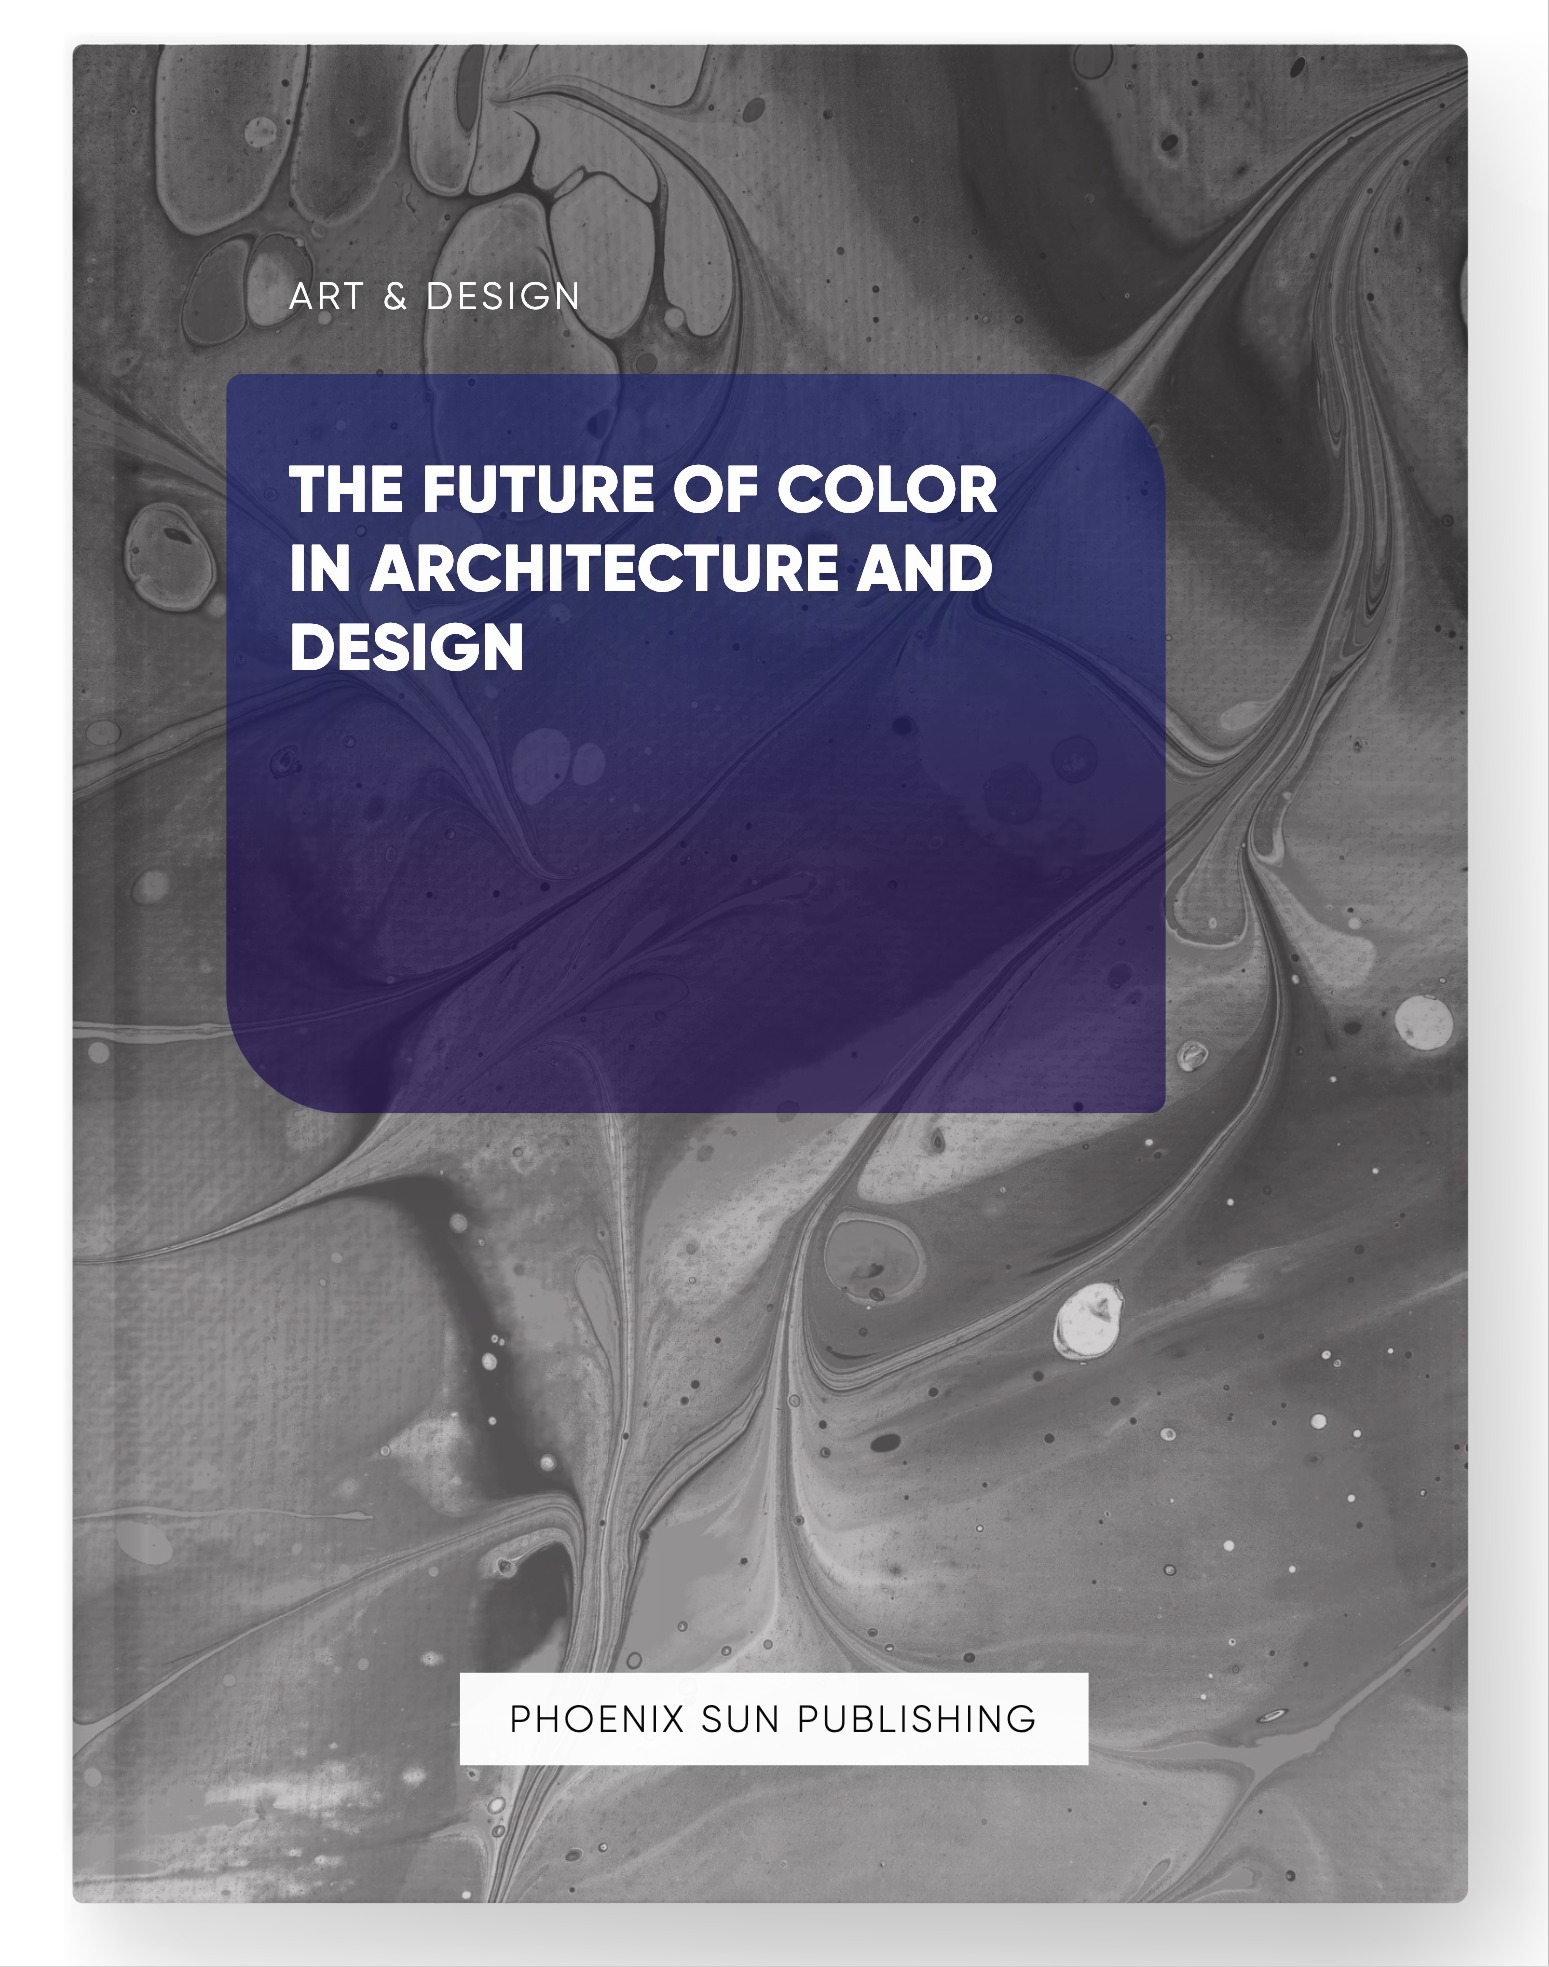 The Future of Color in Architecture and Design